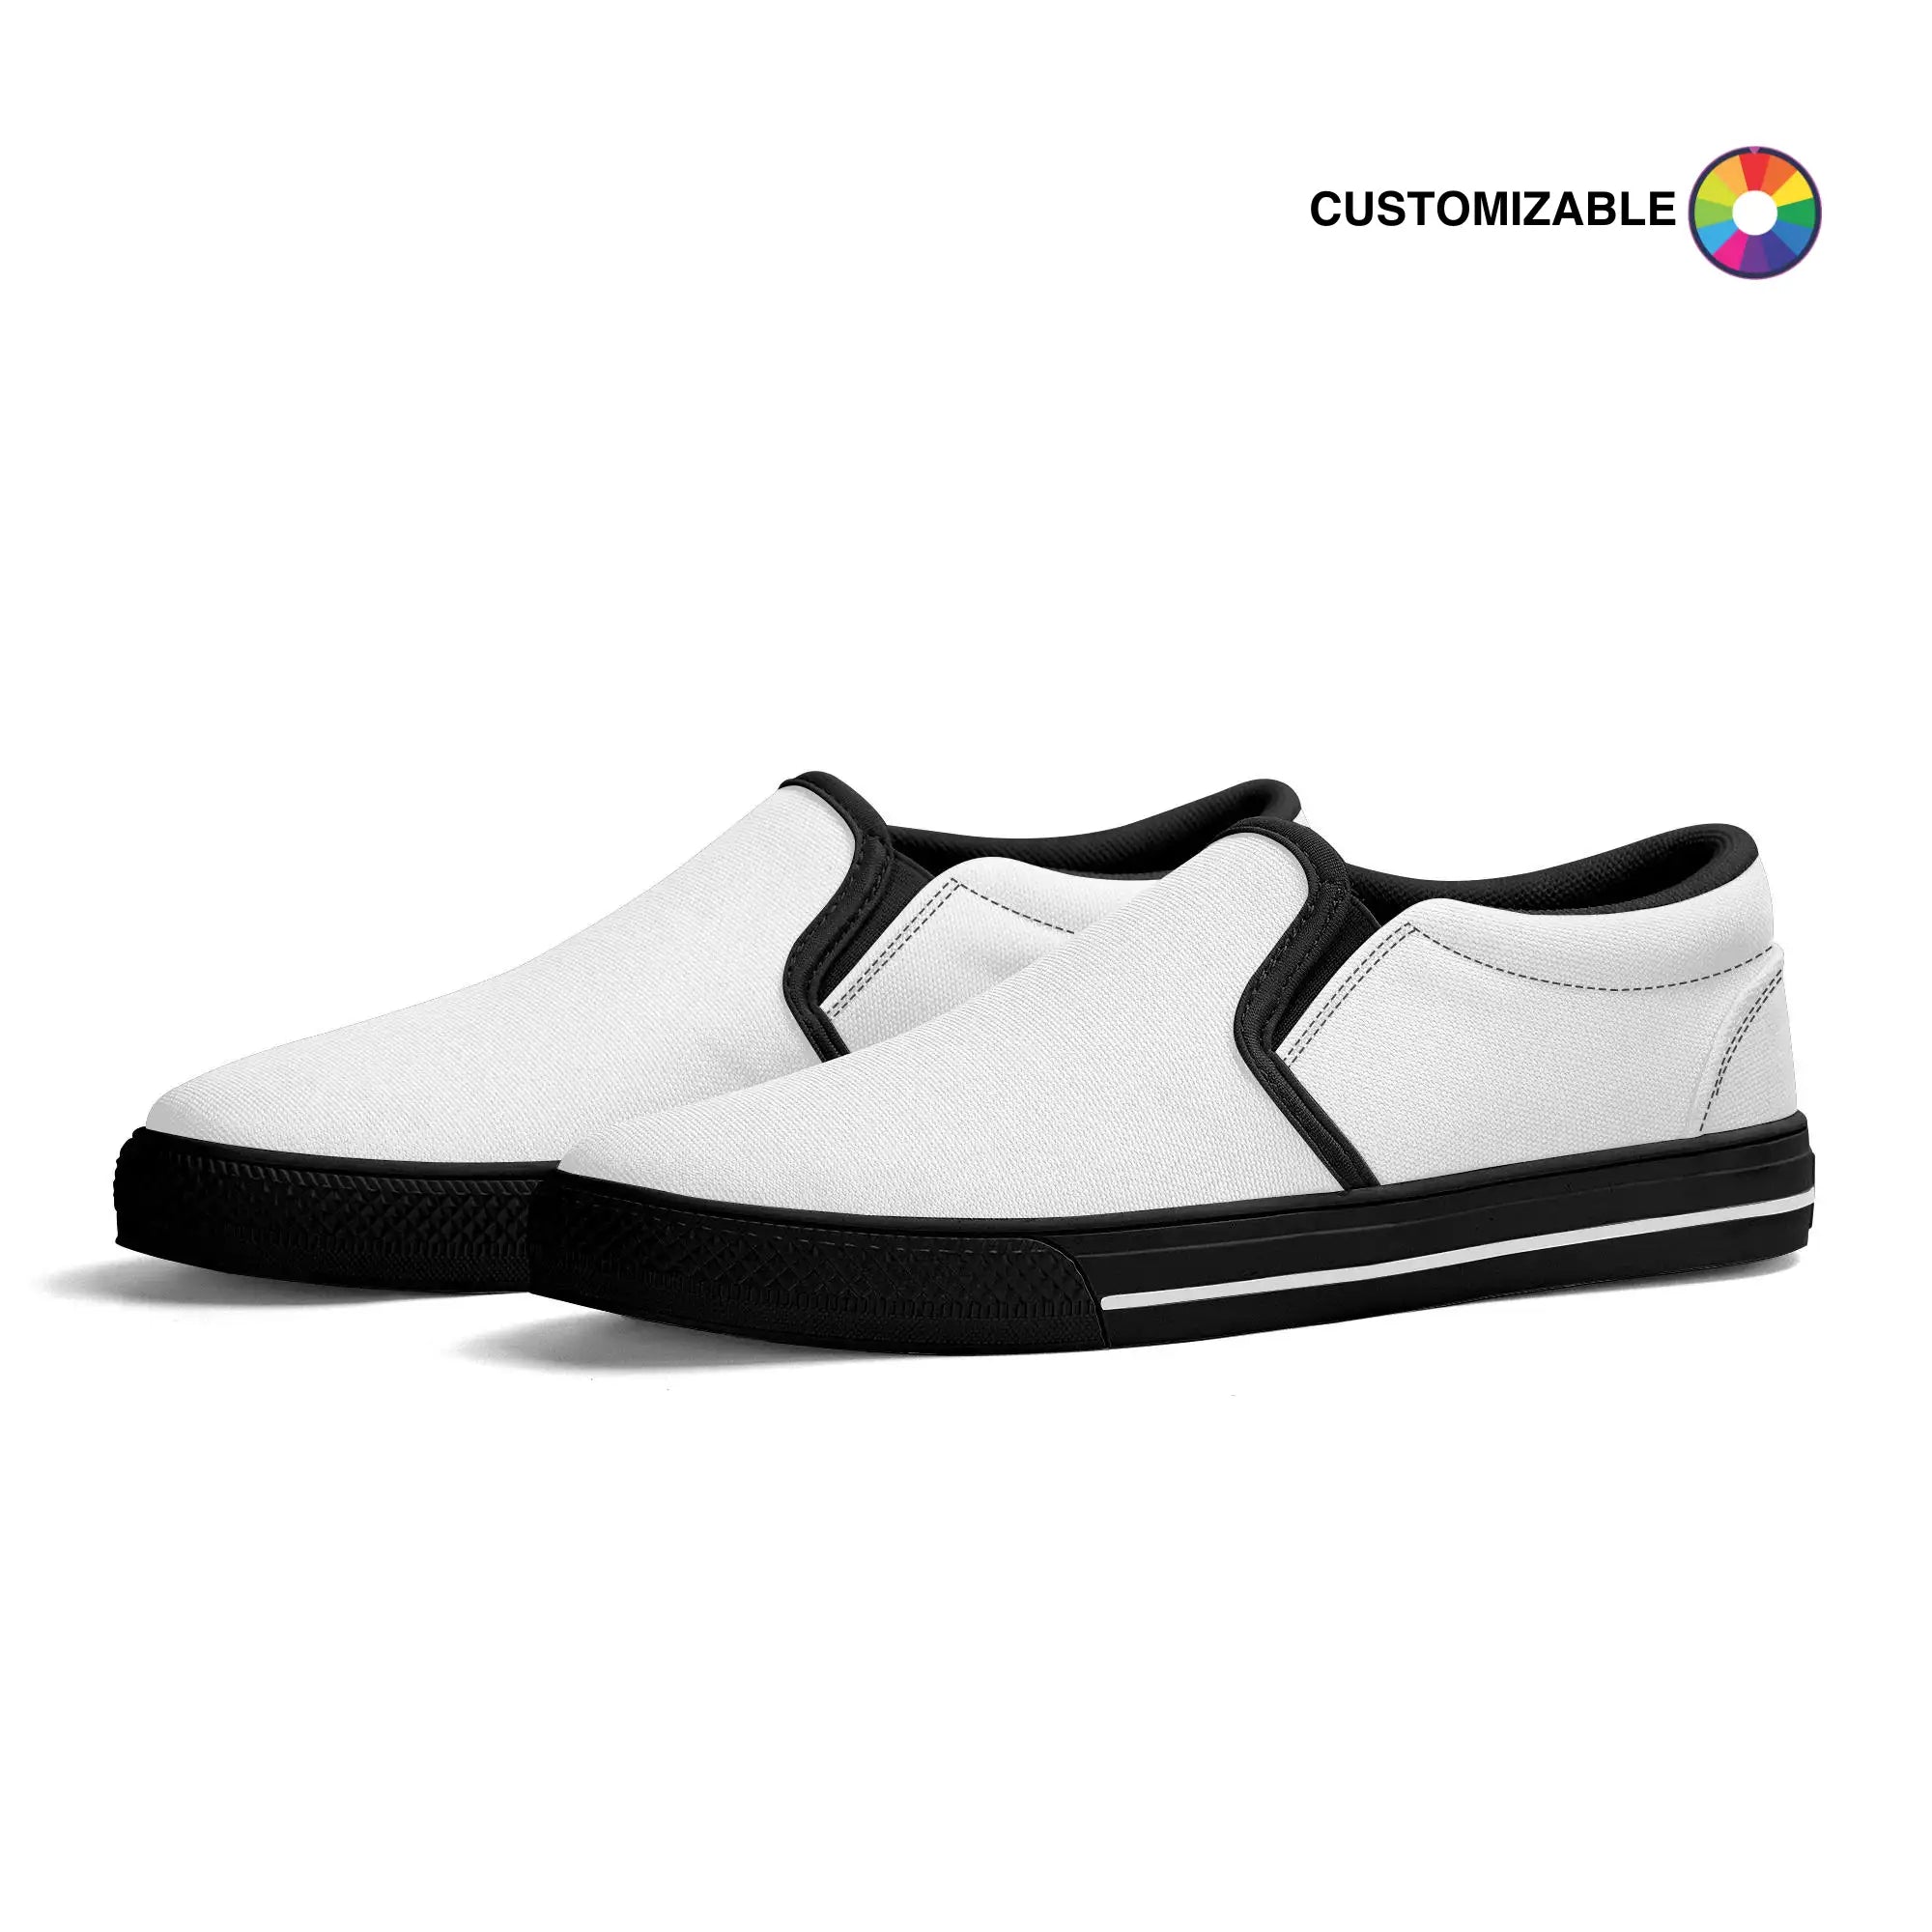 Customizable Slip-on Shoes